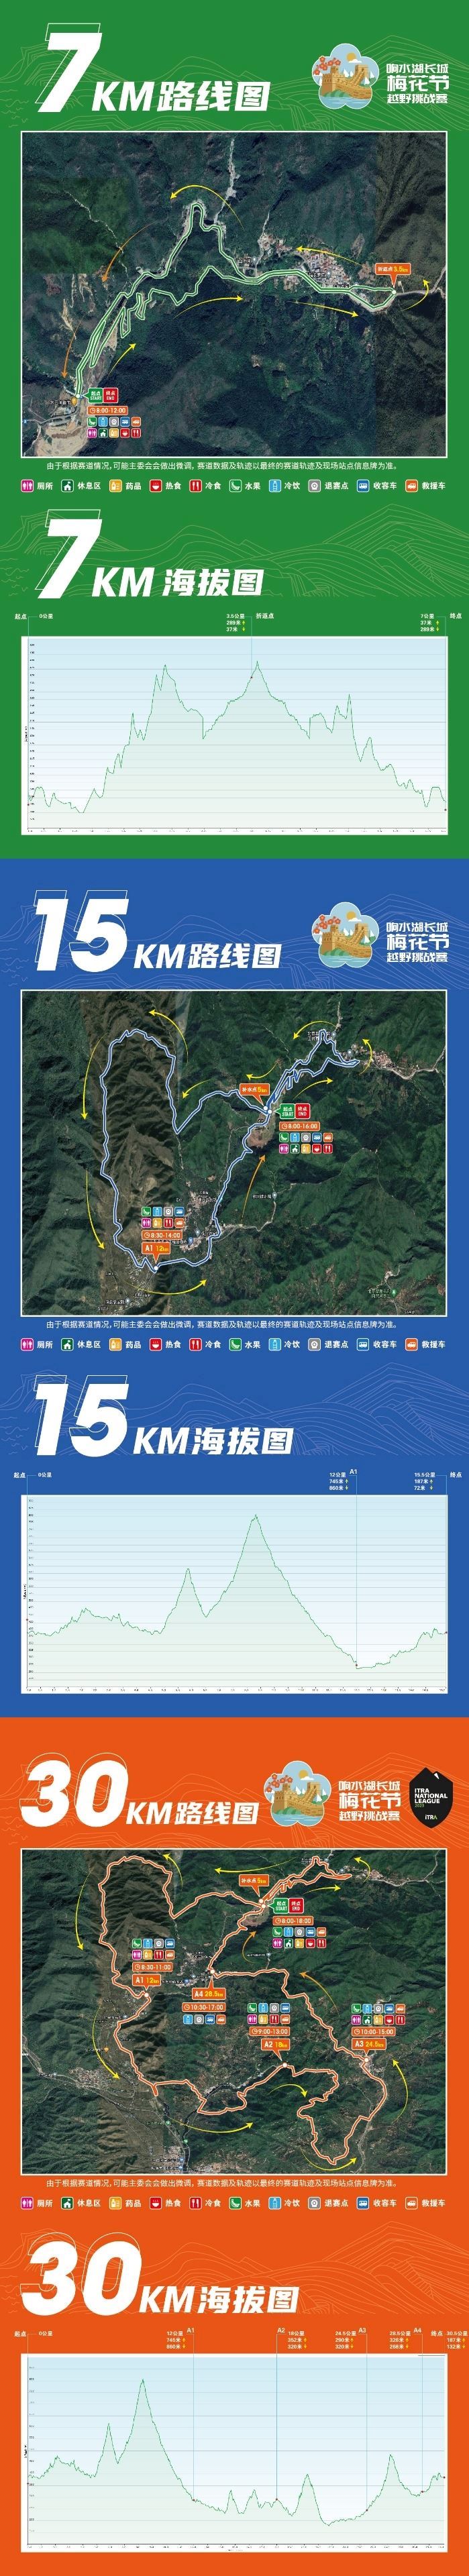 Xiangshui Lake Great Wall Ultra Trail Challenge Mappa del percorso